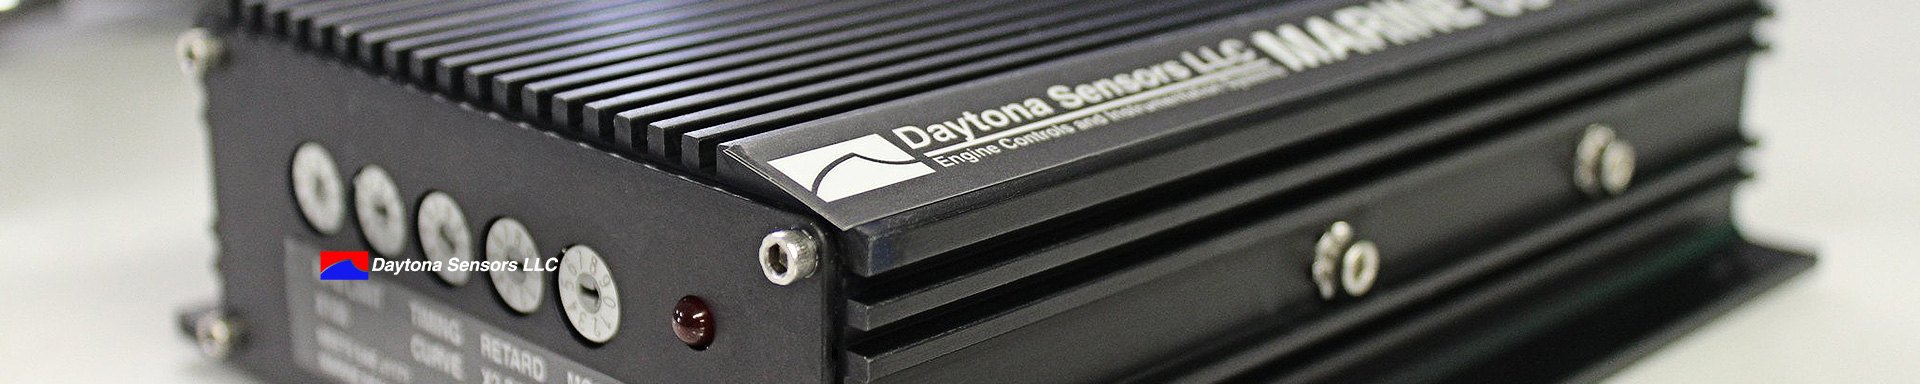 Daytona Sensors